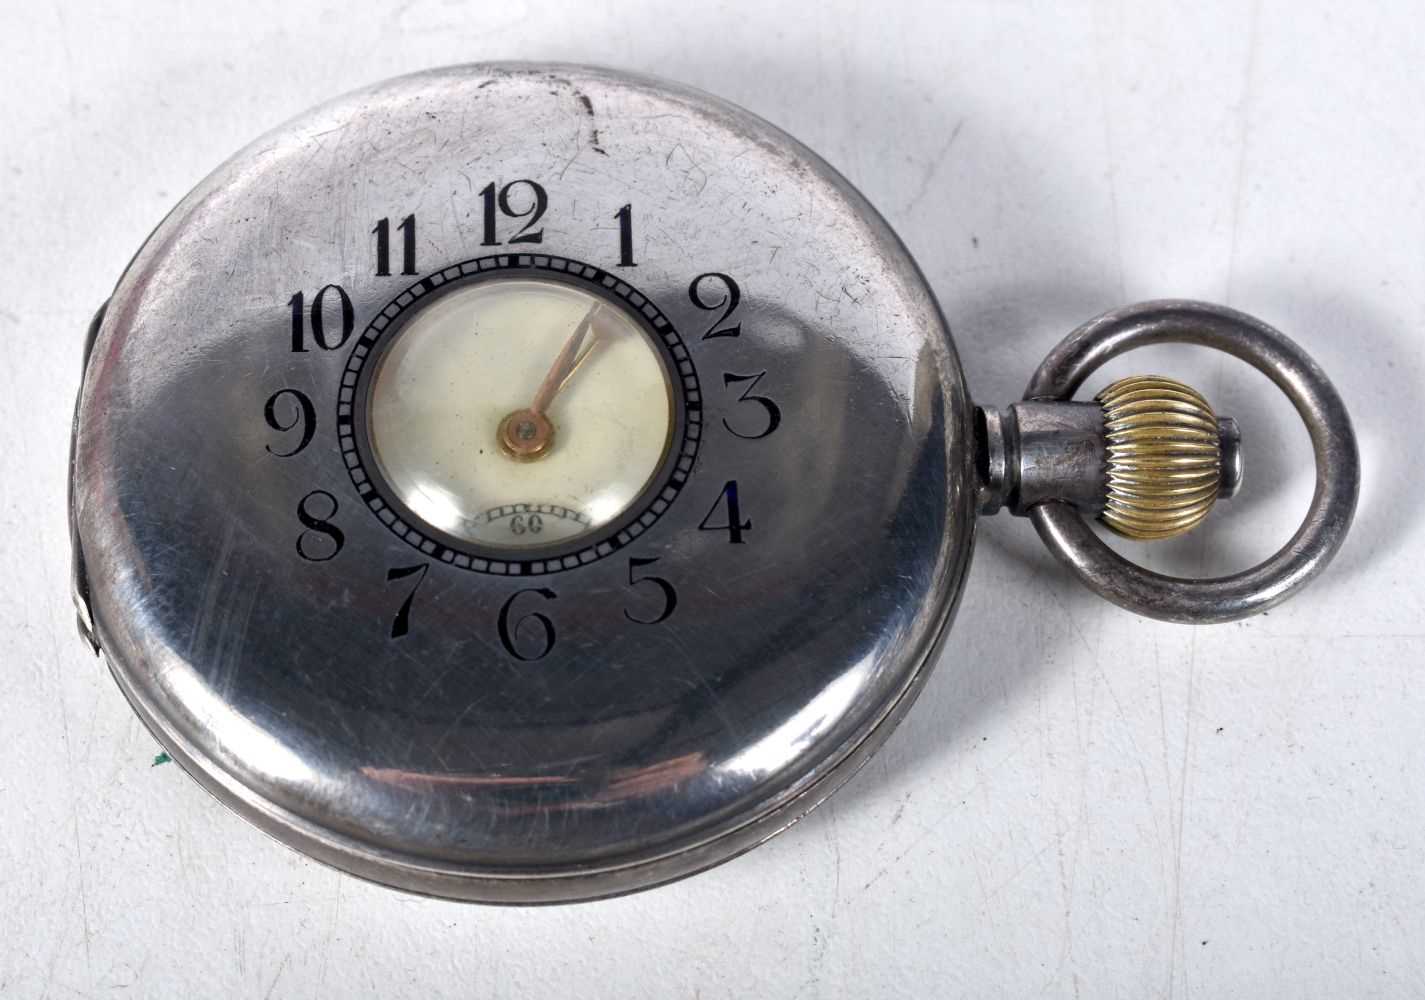 Vintage Silver Gents Half Hunter Pocket Watch.  Stamped 925. Movement - Hand-wind.  WORKING - Tested